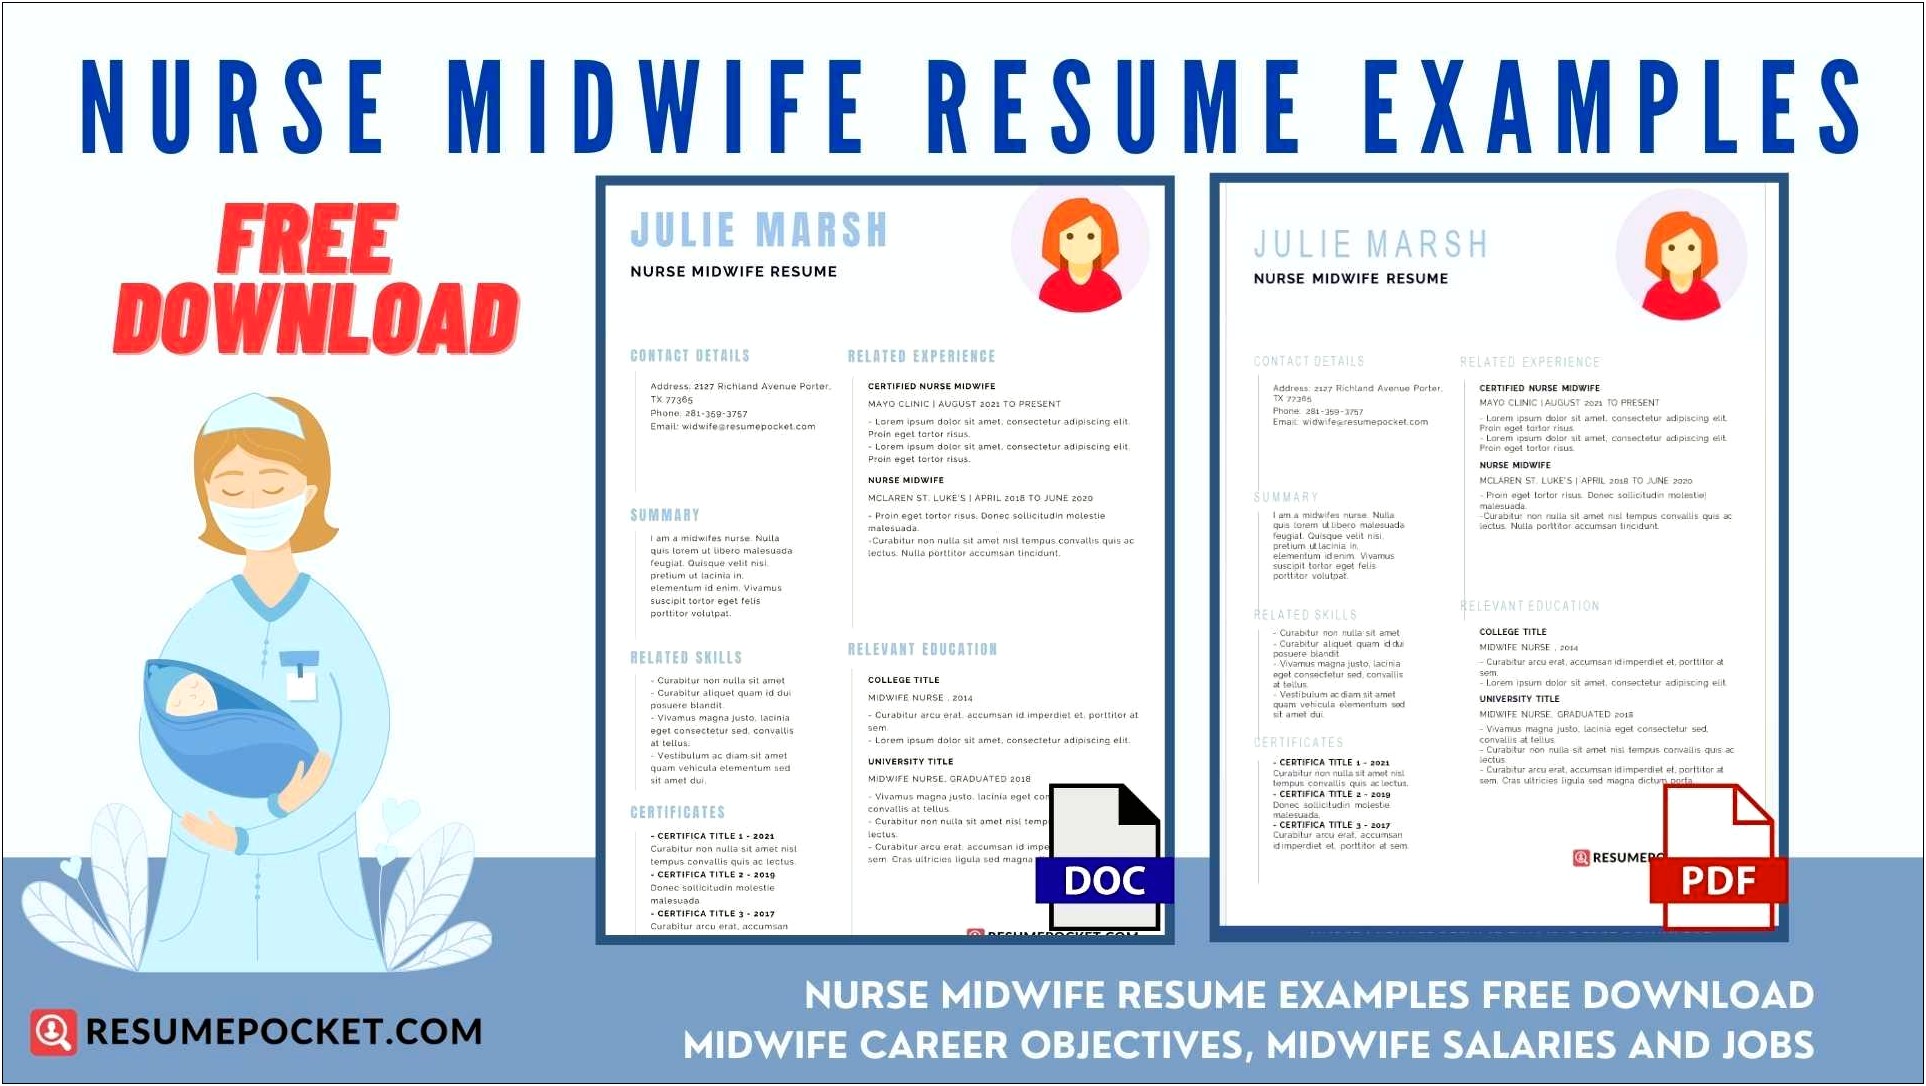 Nursing Resume Format Free Download For 2019